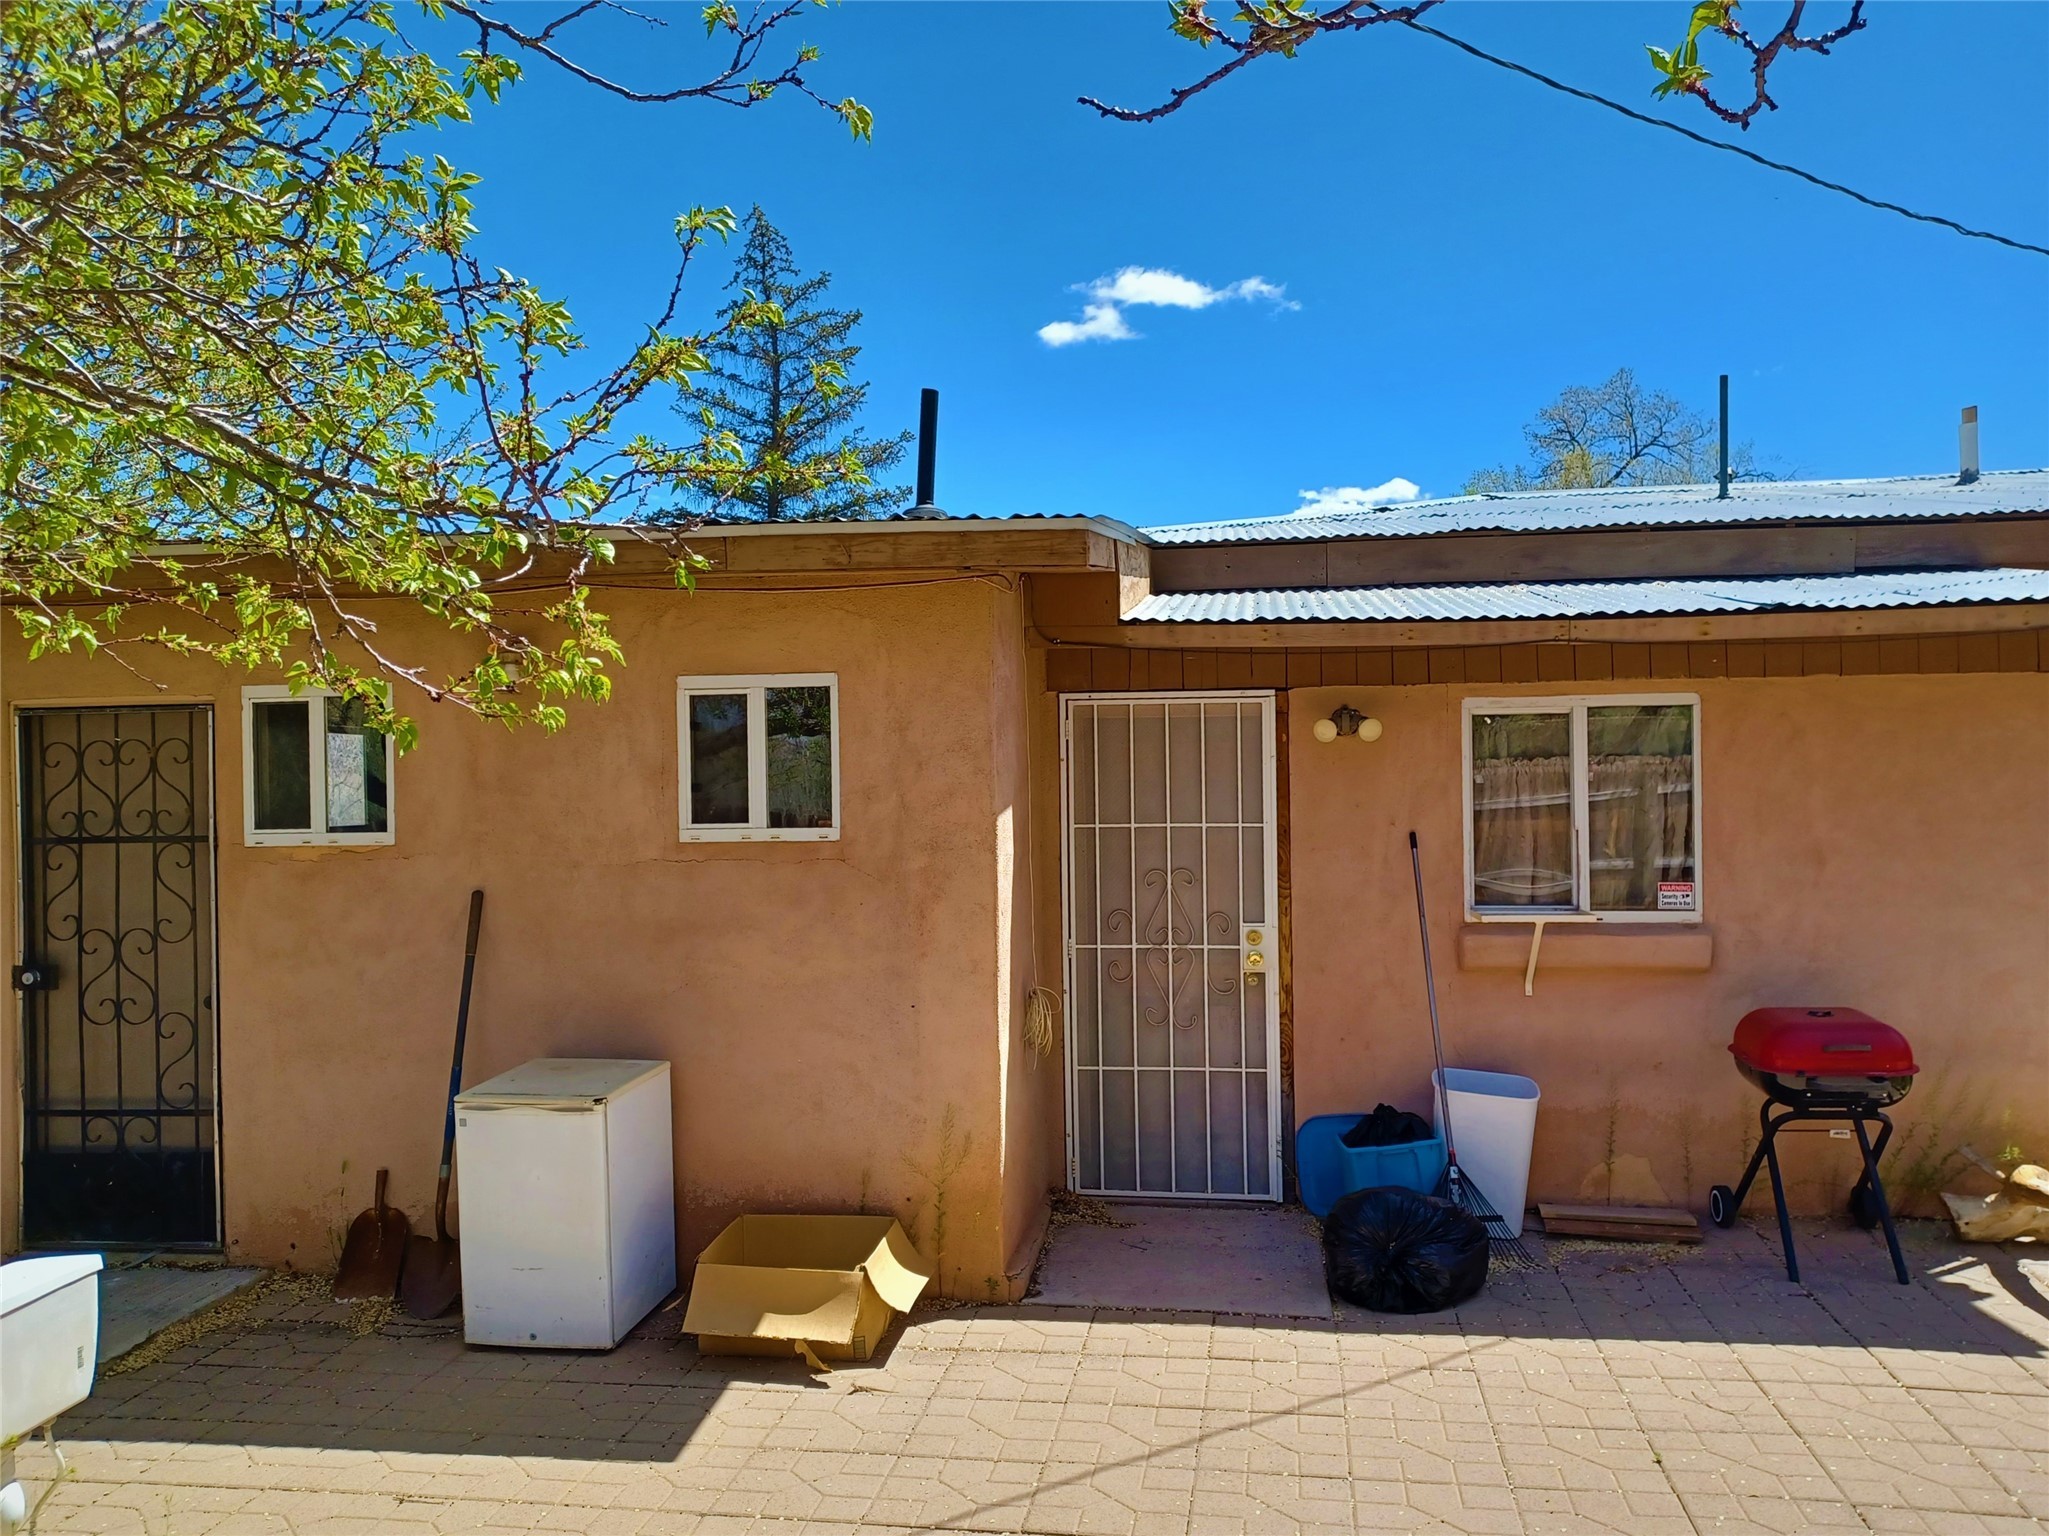 48 Sunlight, Santa Fe, New Mexico 87506, 3 Bedrooms Bedrooms, ,2 BathroomsBathrooms,Residential,For Sale,48 Sunlight,202337862